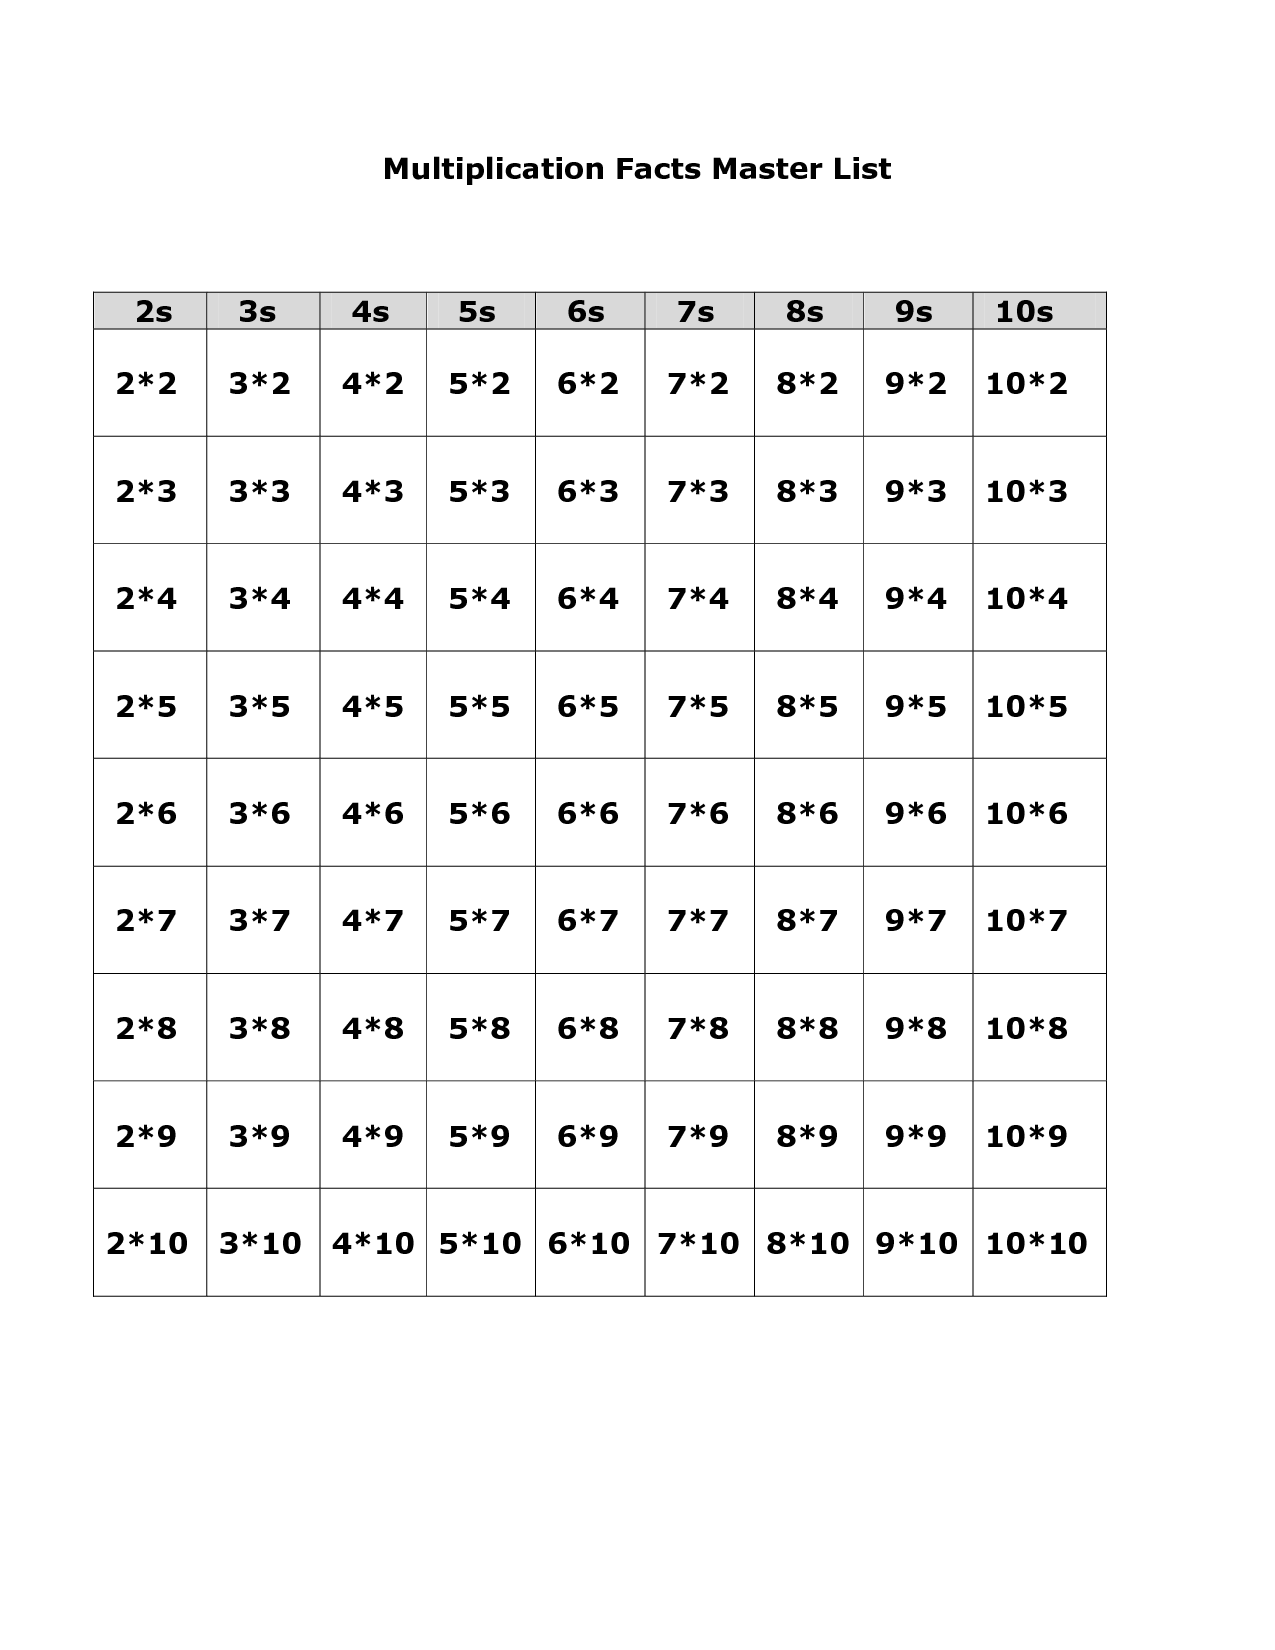 Multiplication Facts Worksheet 2s Image